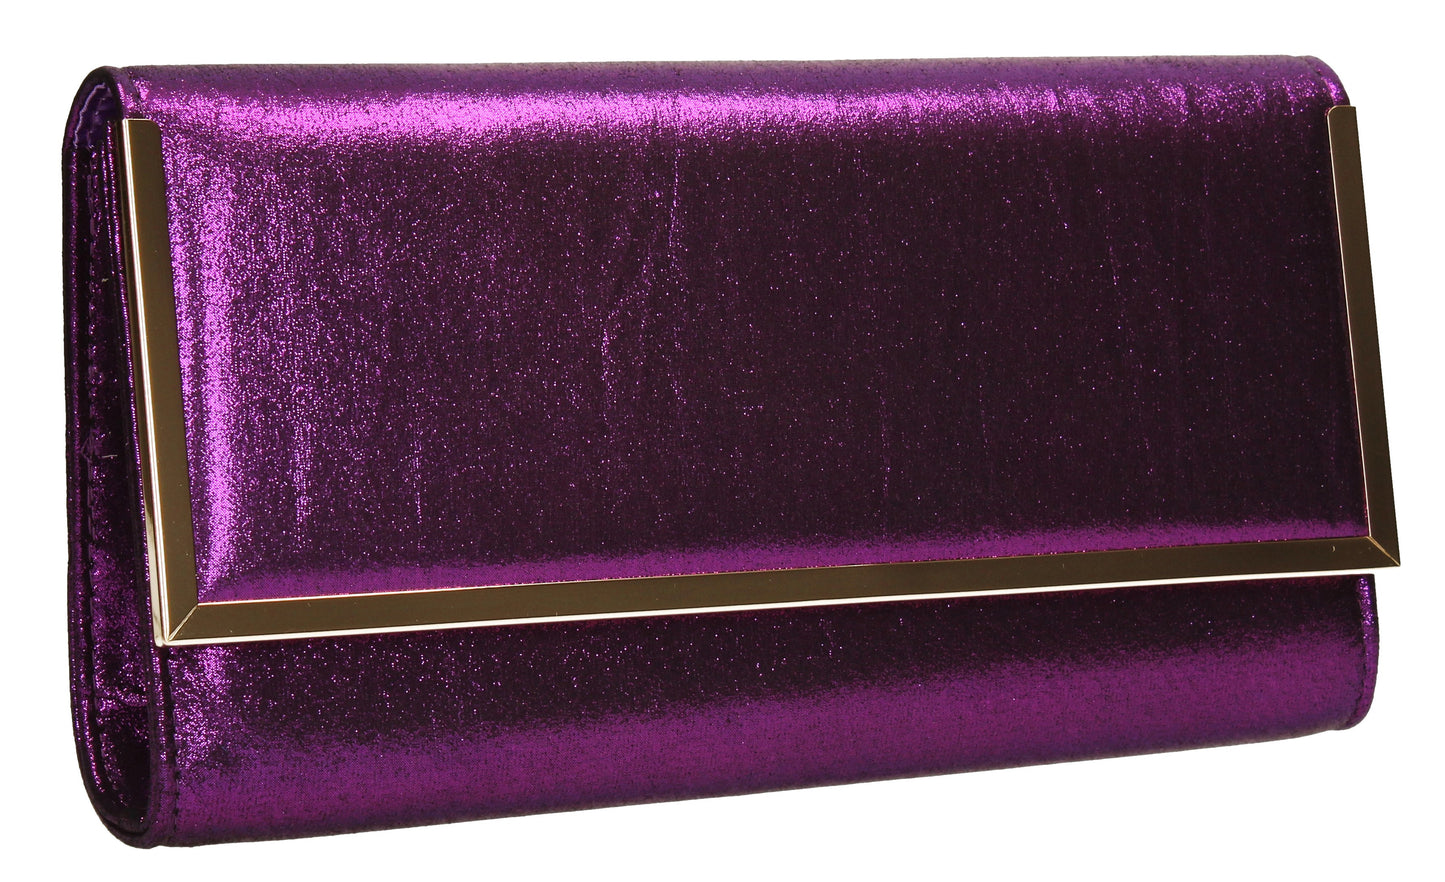 SWANKYSWANS Ruby Clutch Bag Purple Cute Cheap Clutch Bag For Weddings School and Work